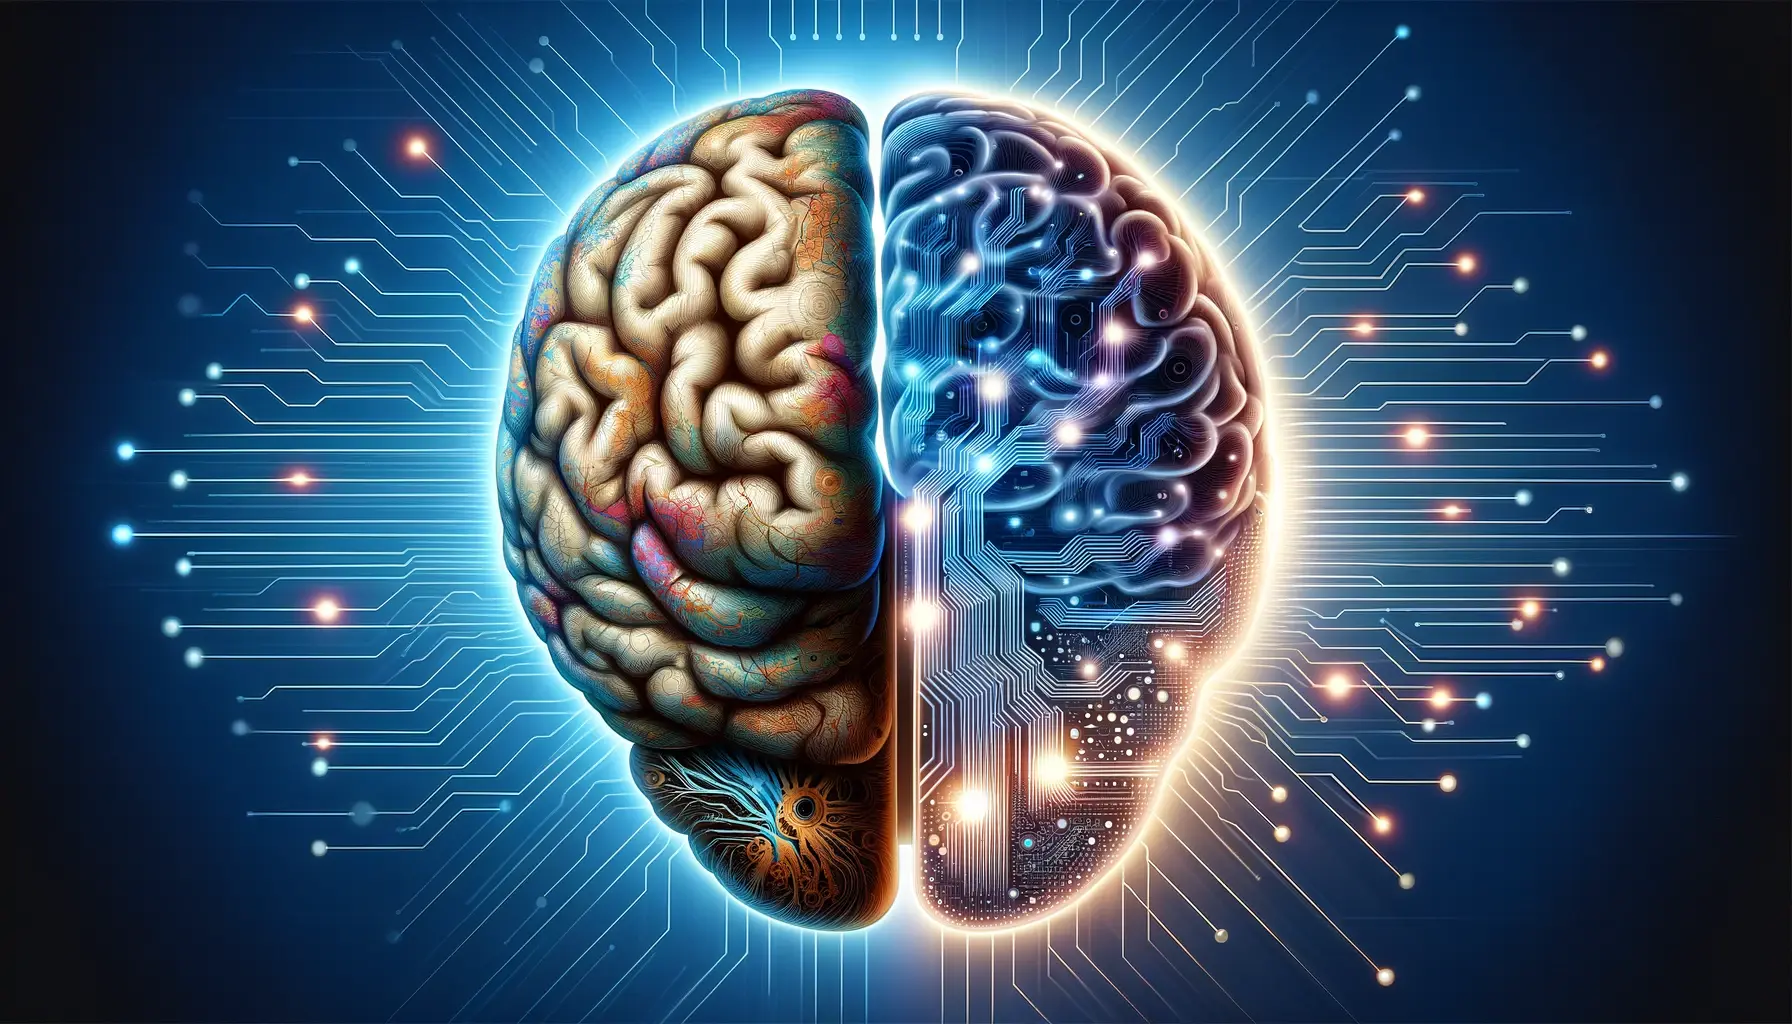 a human brain and a digital brain symbolizing AI vs human comparison